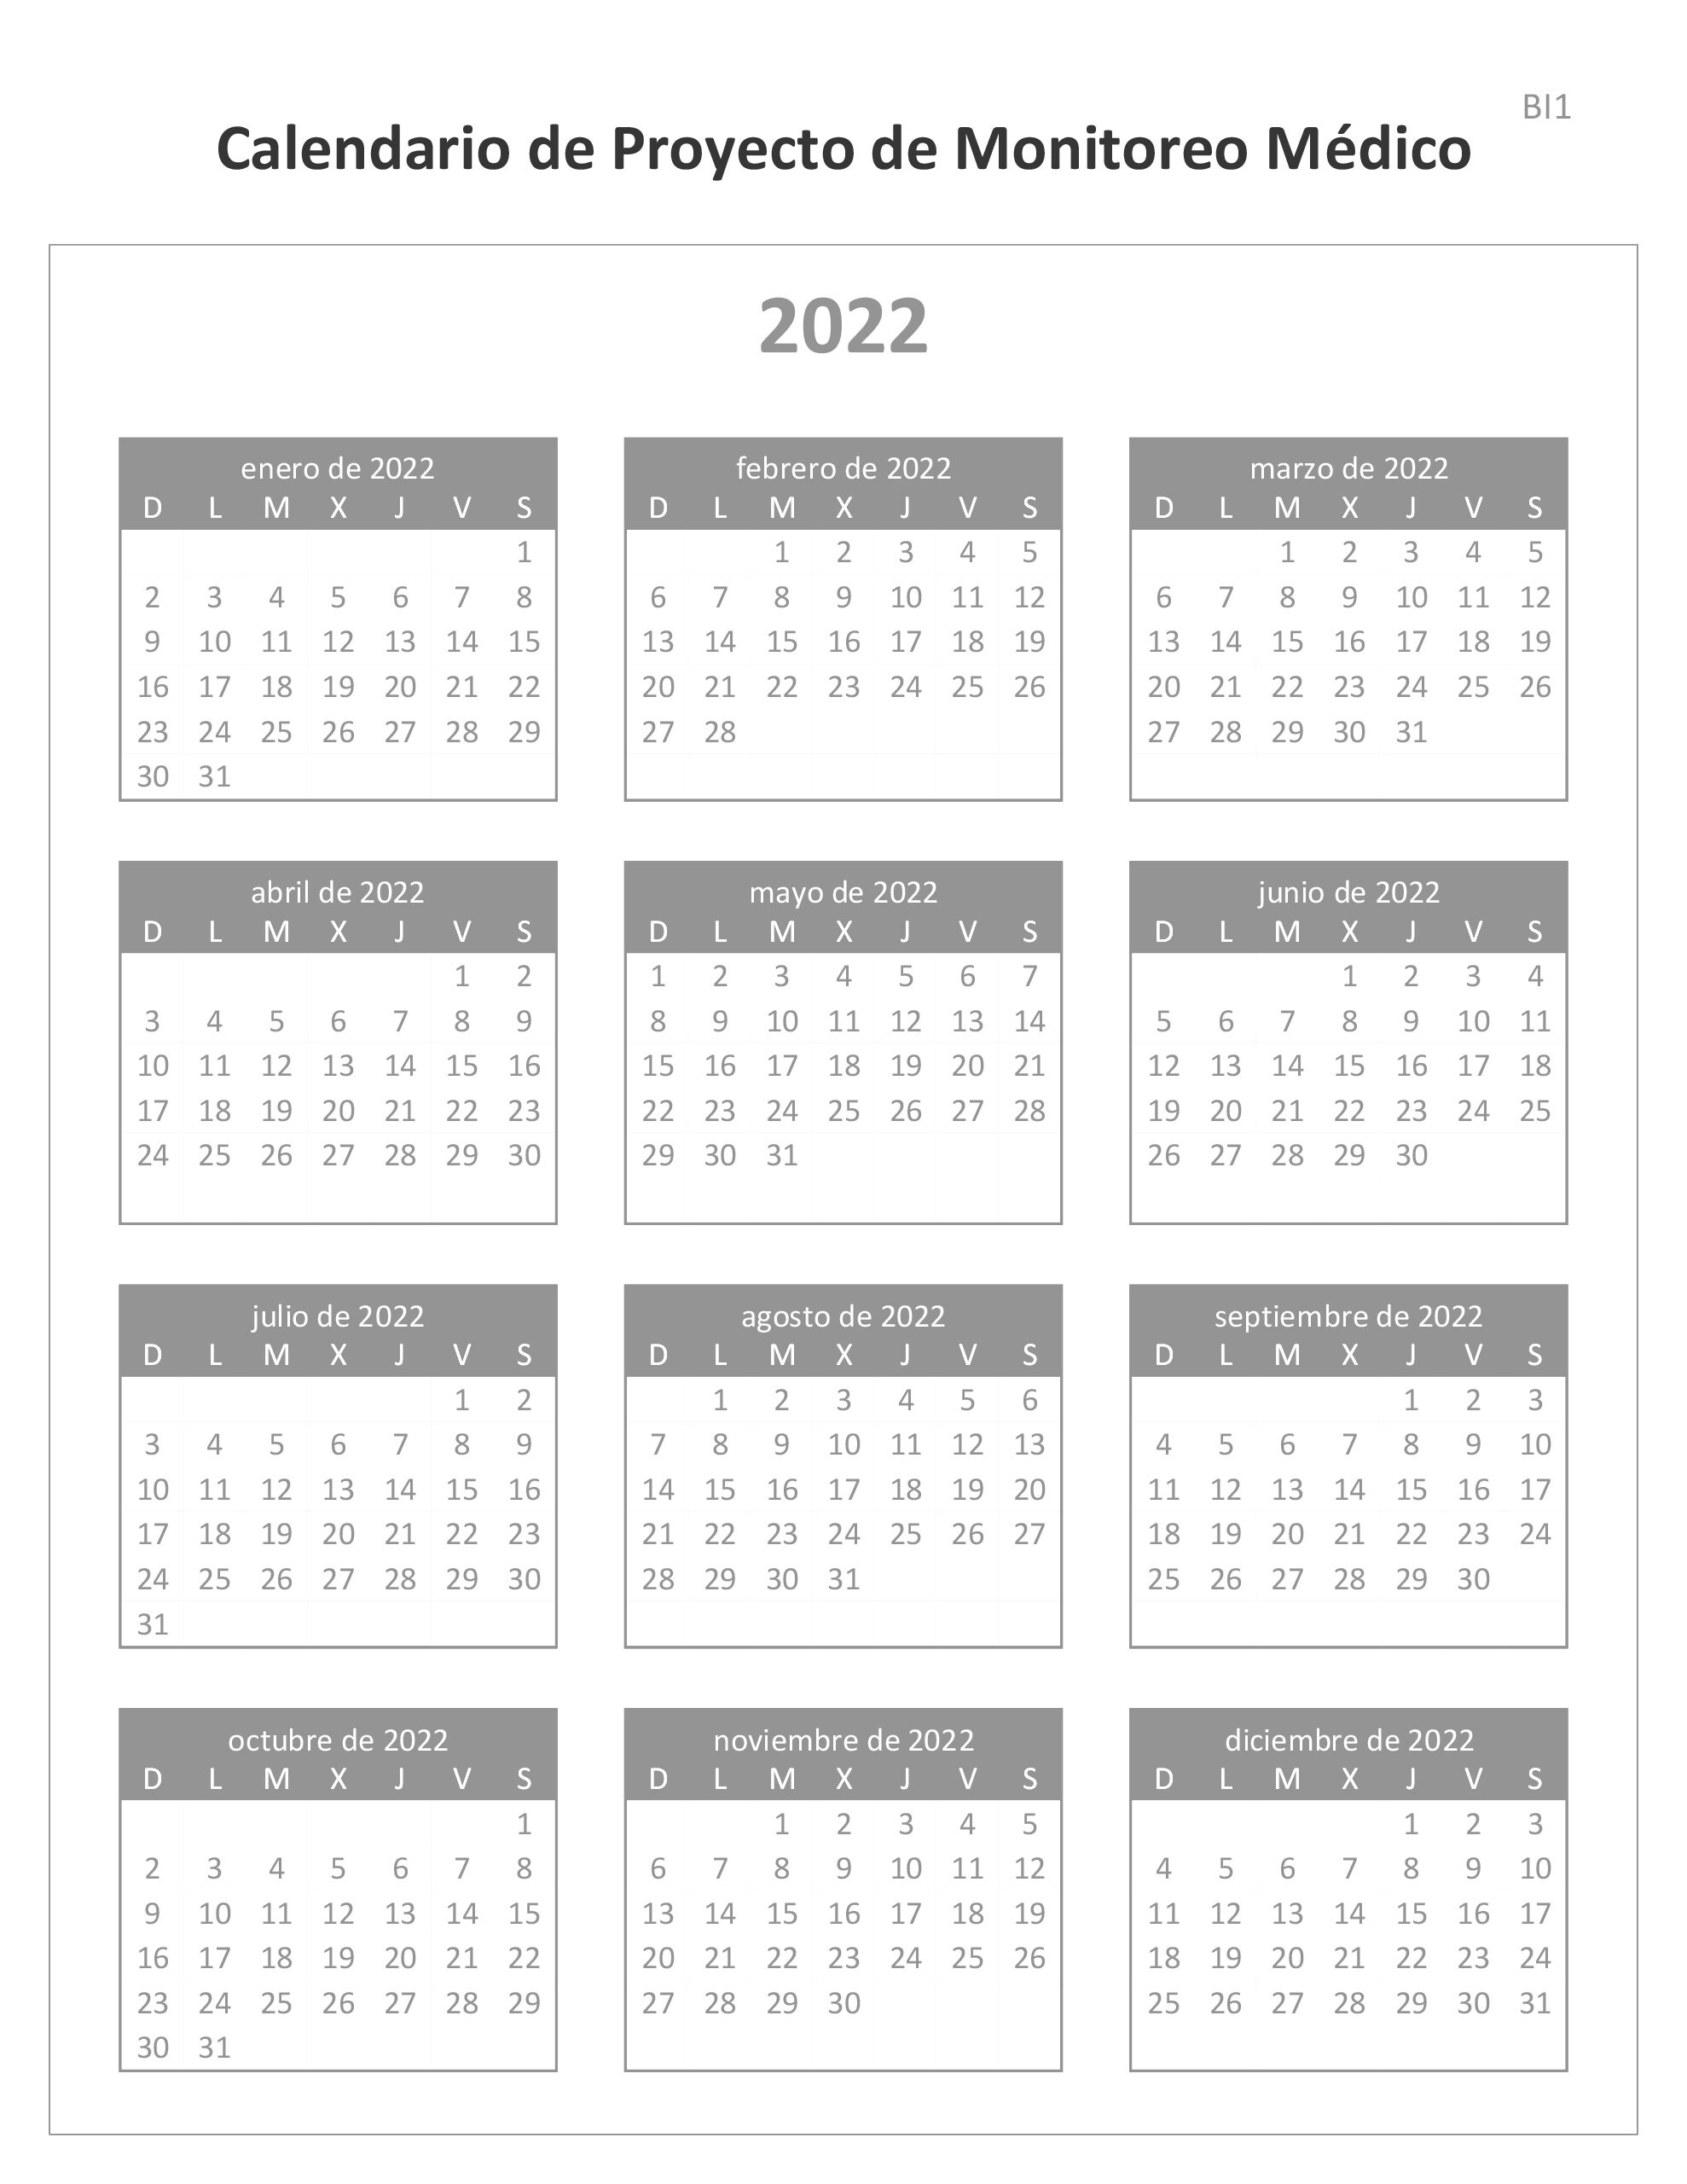 MMP calendar Spanish 2022